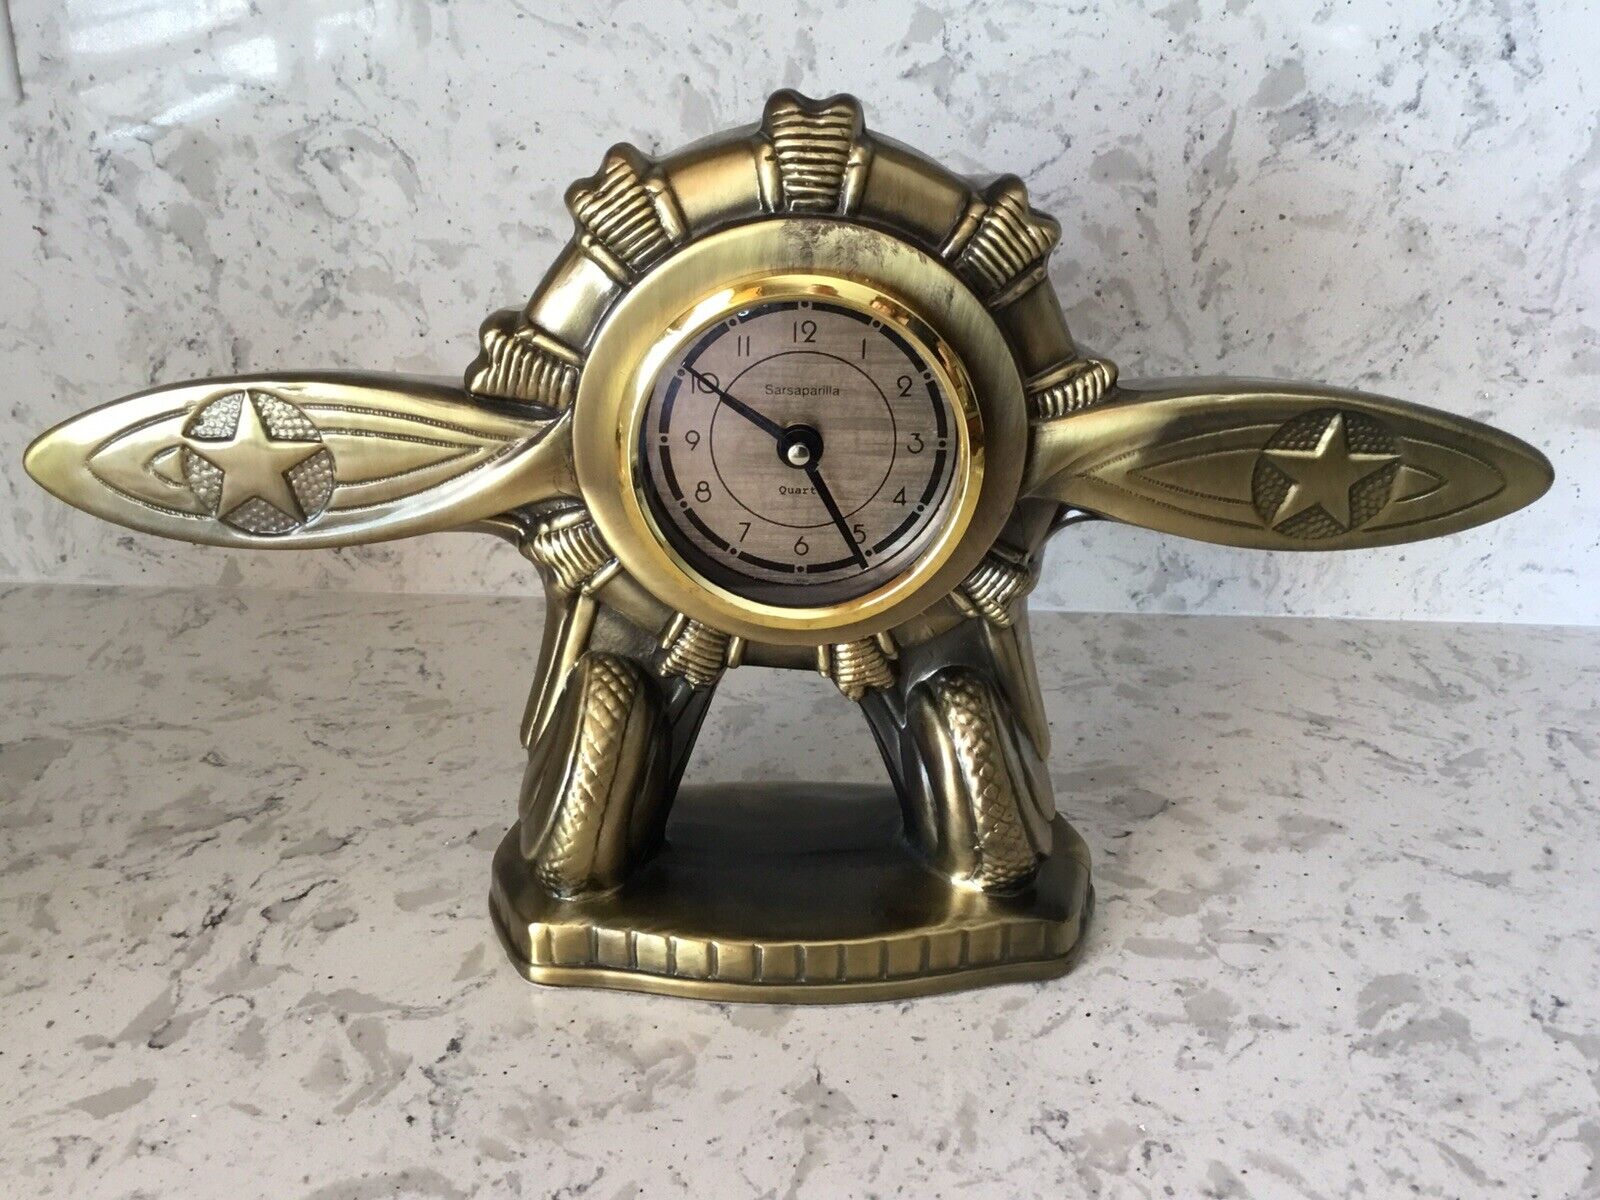 1985 Sarsaparilla #555  Mantel Clock 40s Era Stylized Airplane Aviation *WORKS*